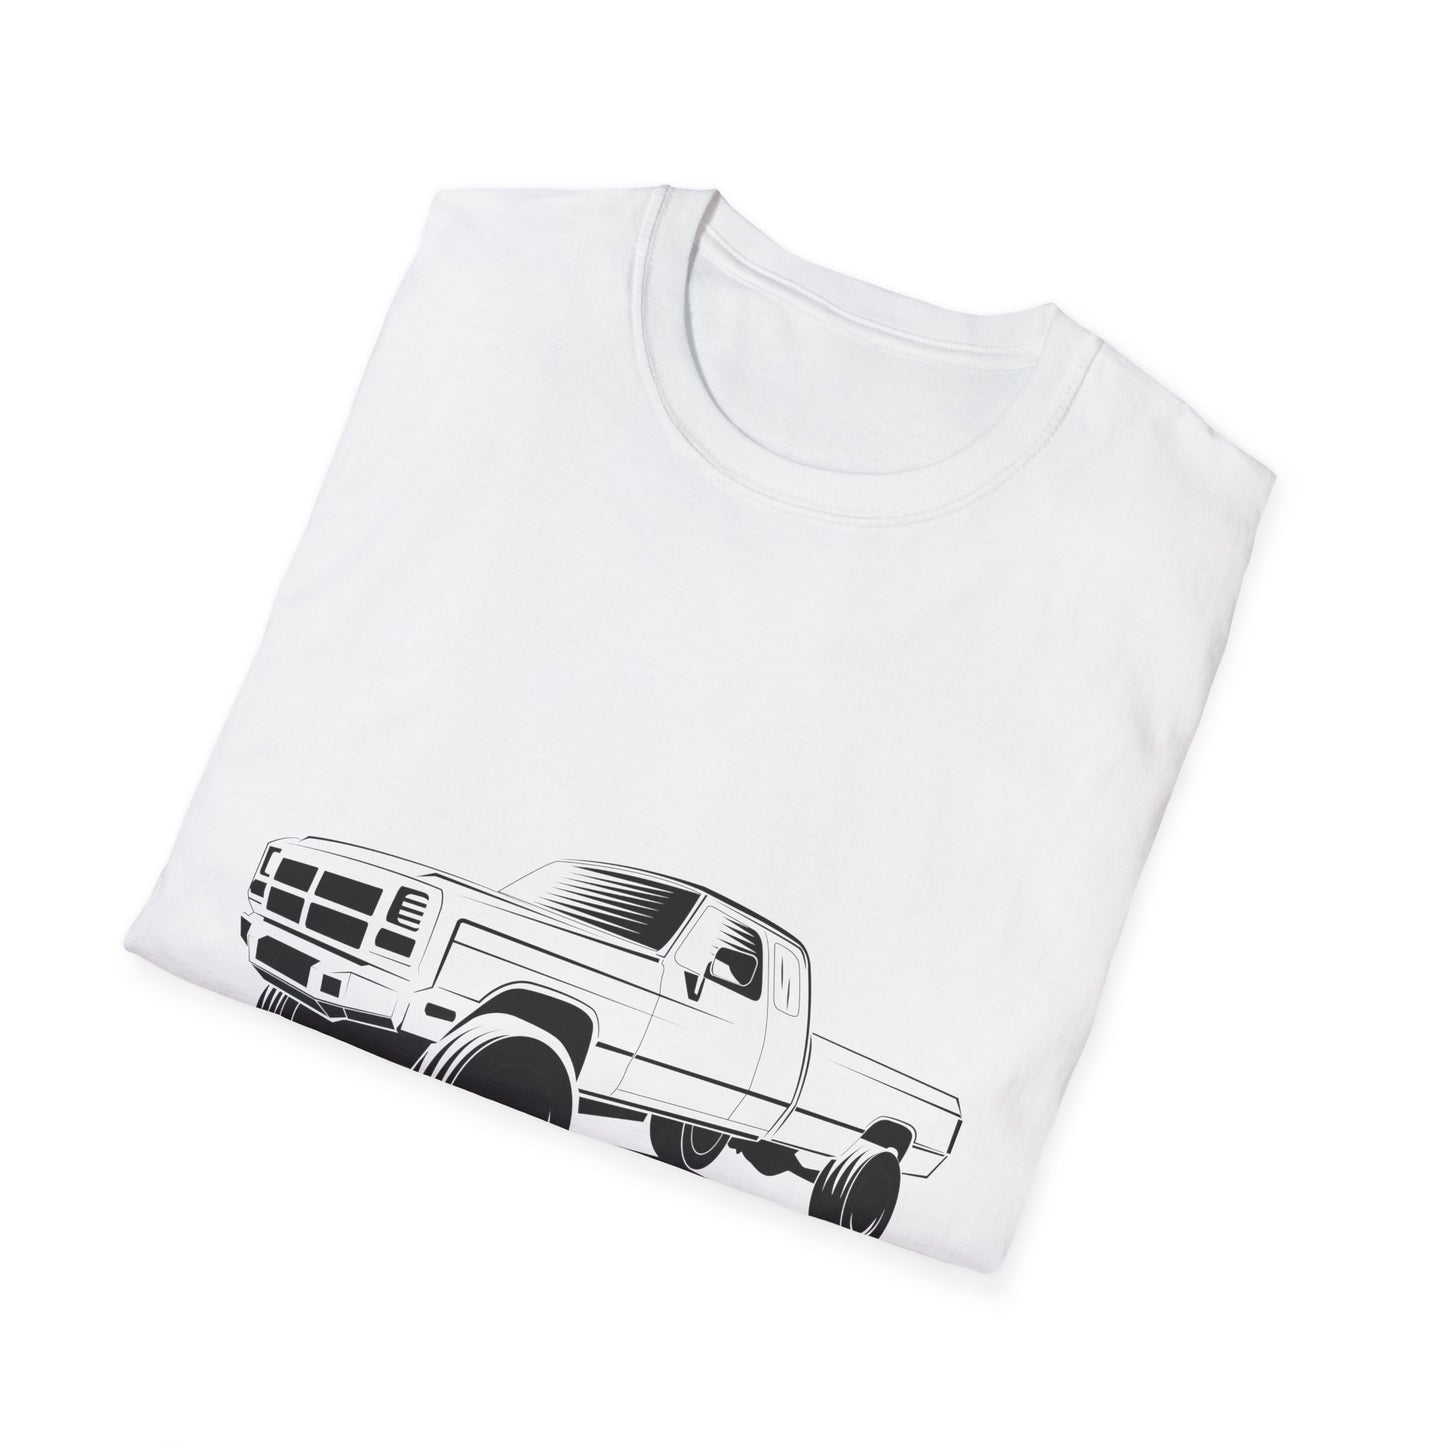 1st Generation Dodge Diesel Truck Vintage Edition T-Shirt